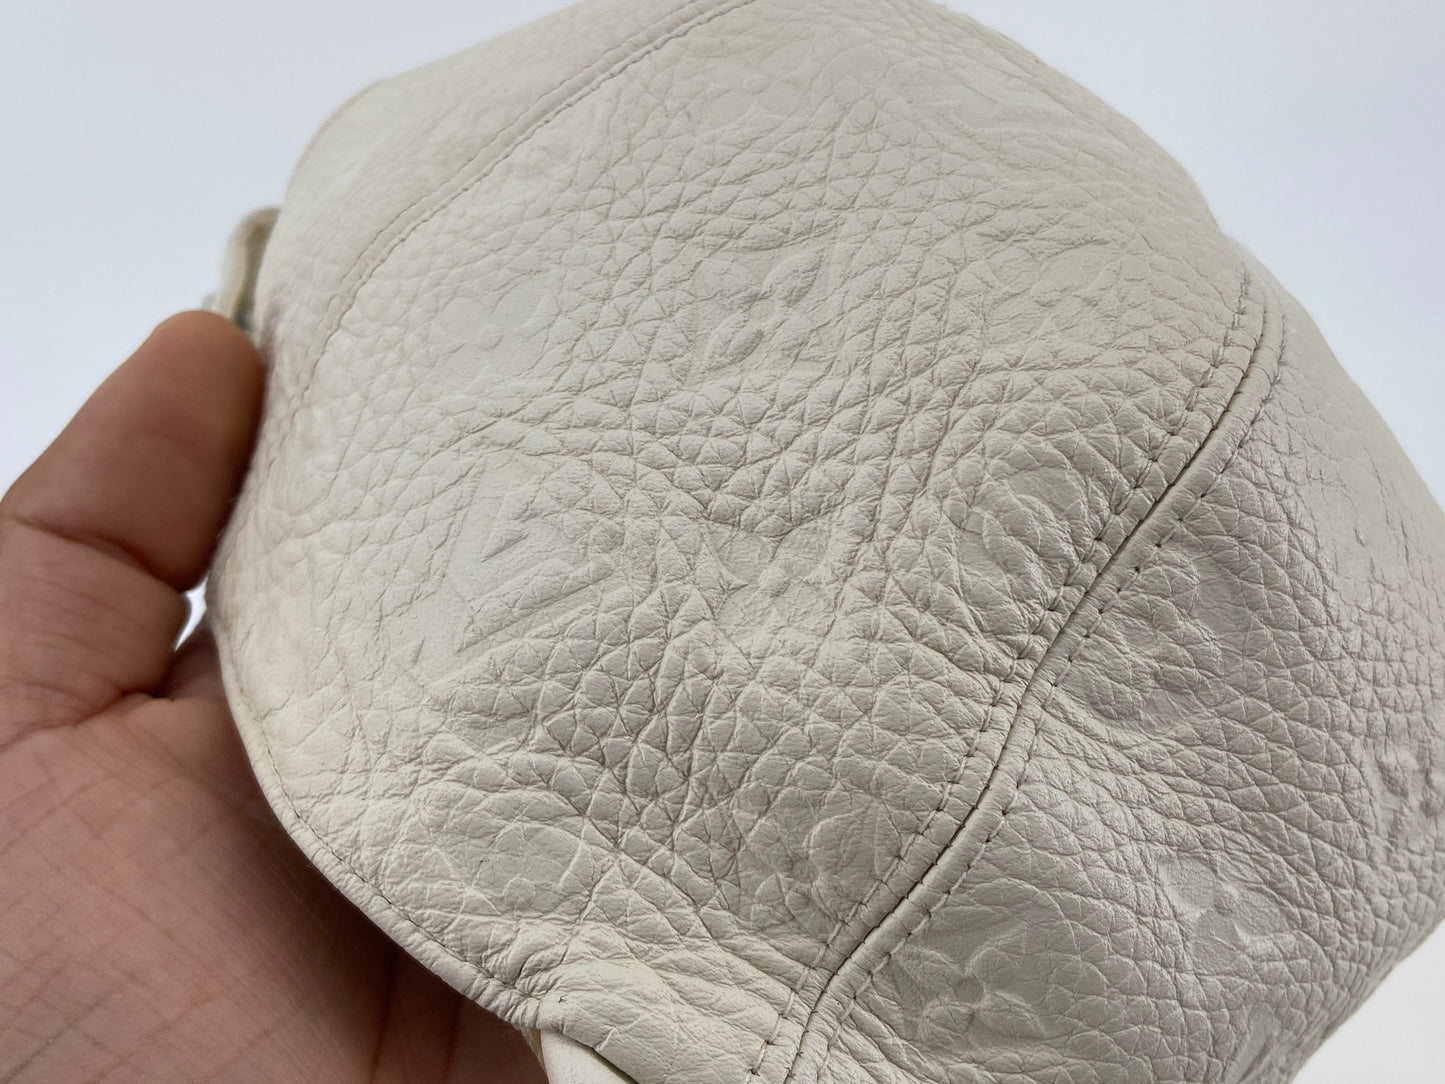 Louis Vuitton x Virgil Abloh 1.0 Cap White Empreinte Leather